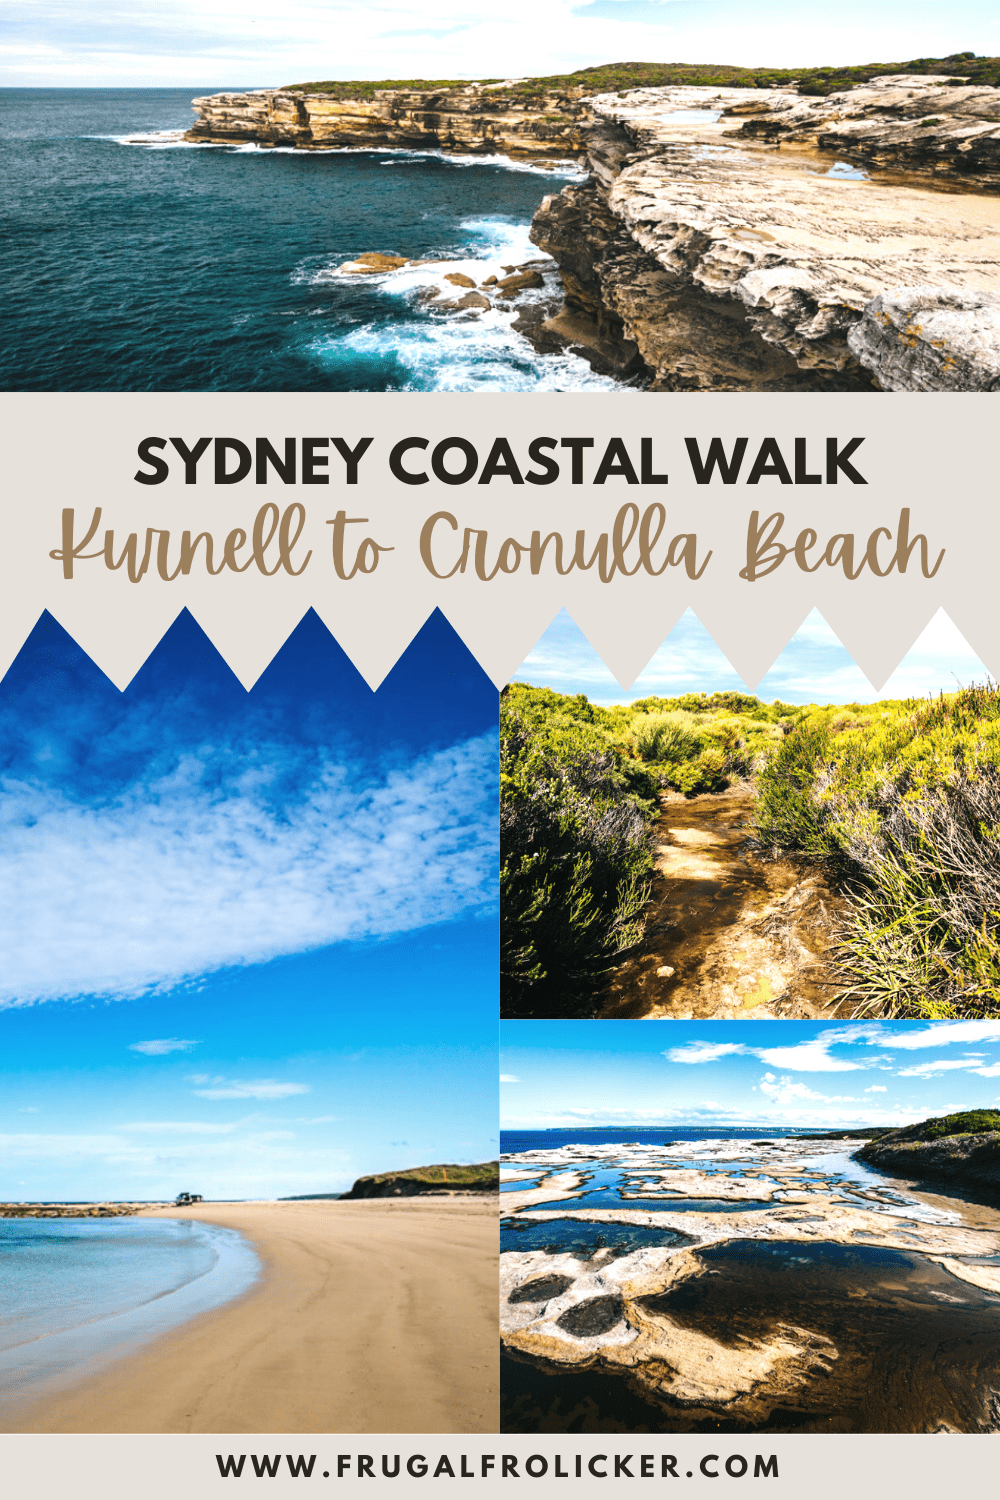 Kurnell to Cronulla Beach Walk - Botany Bay Coastal Walk in Sydney, Australia